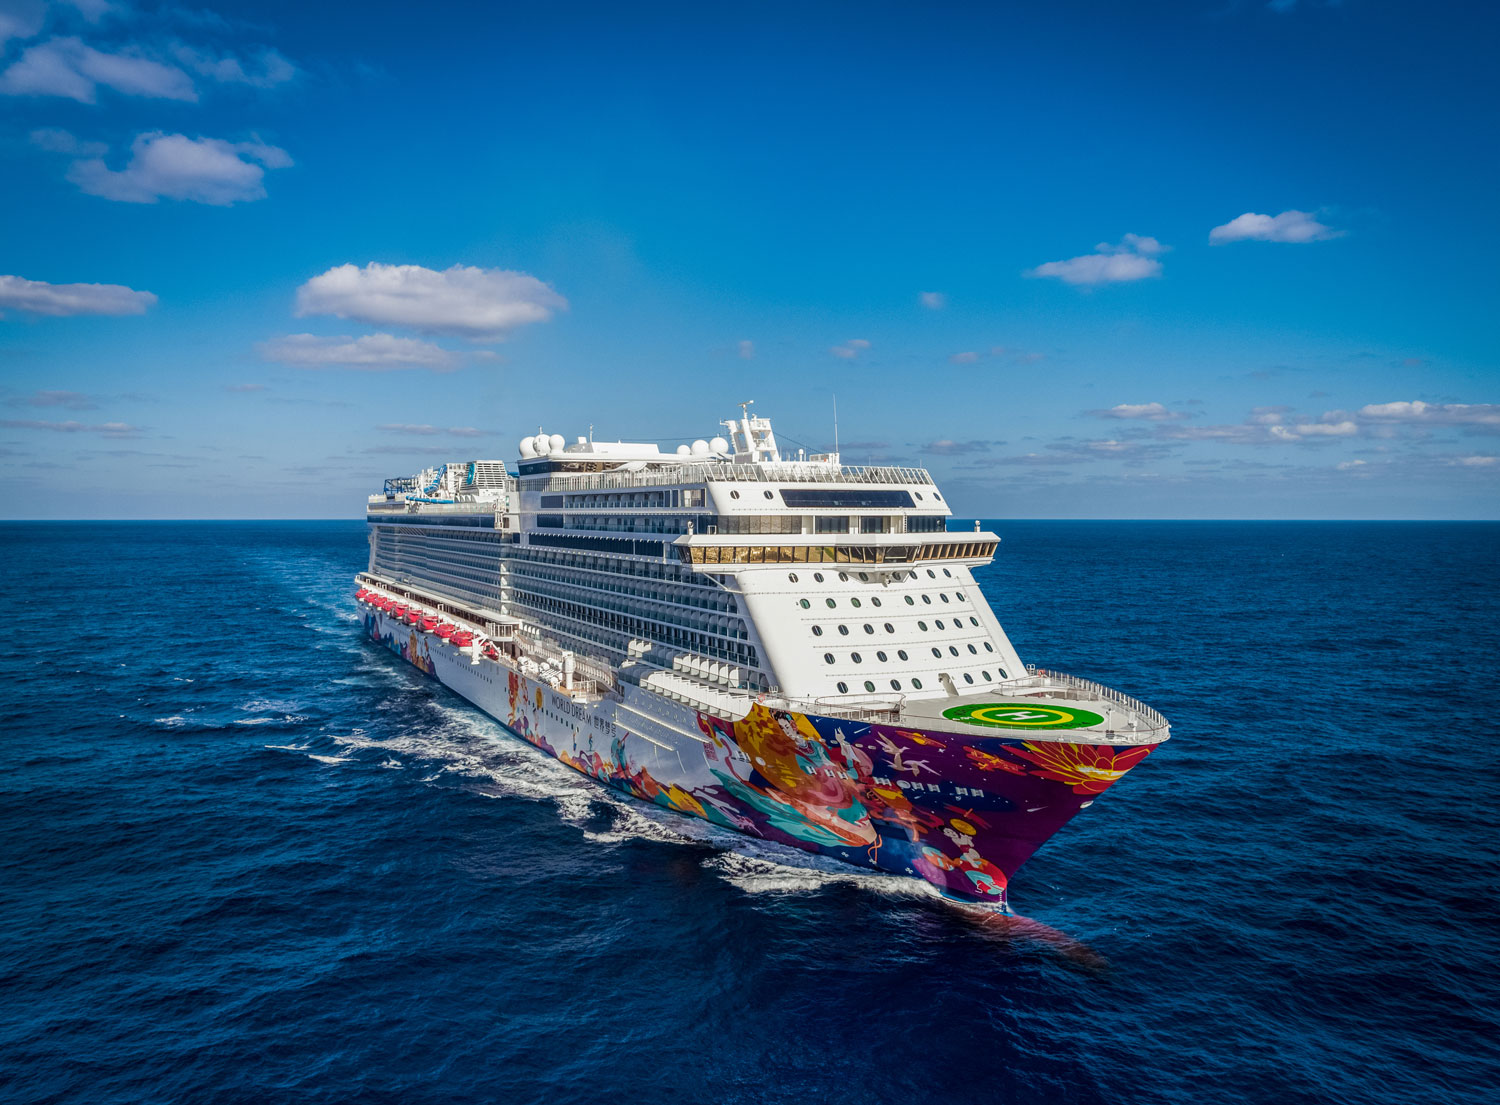 Dream Cruises, Asia’s Global Cruise Line